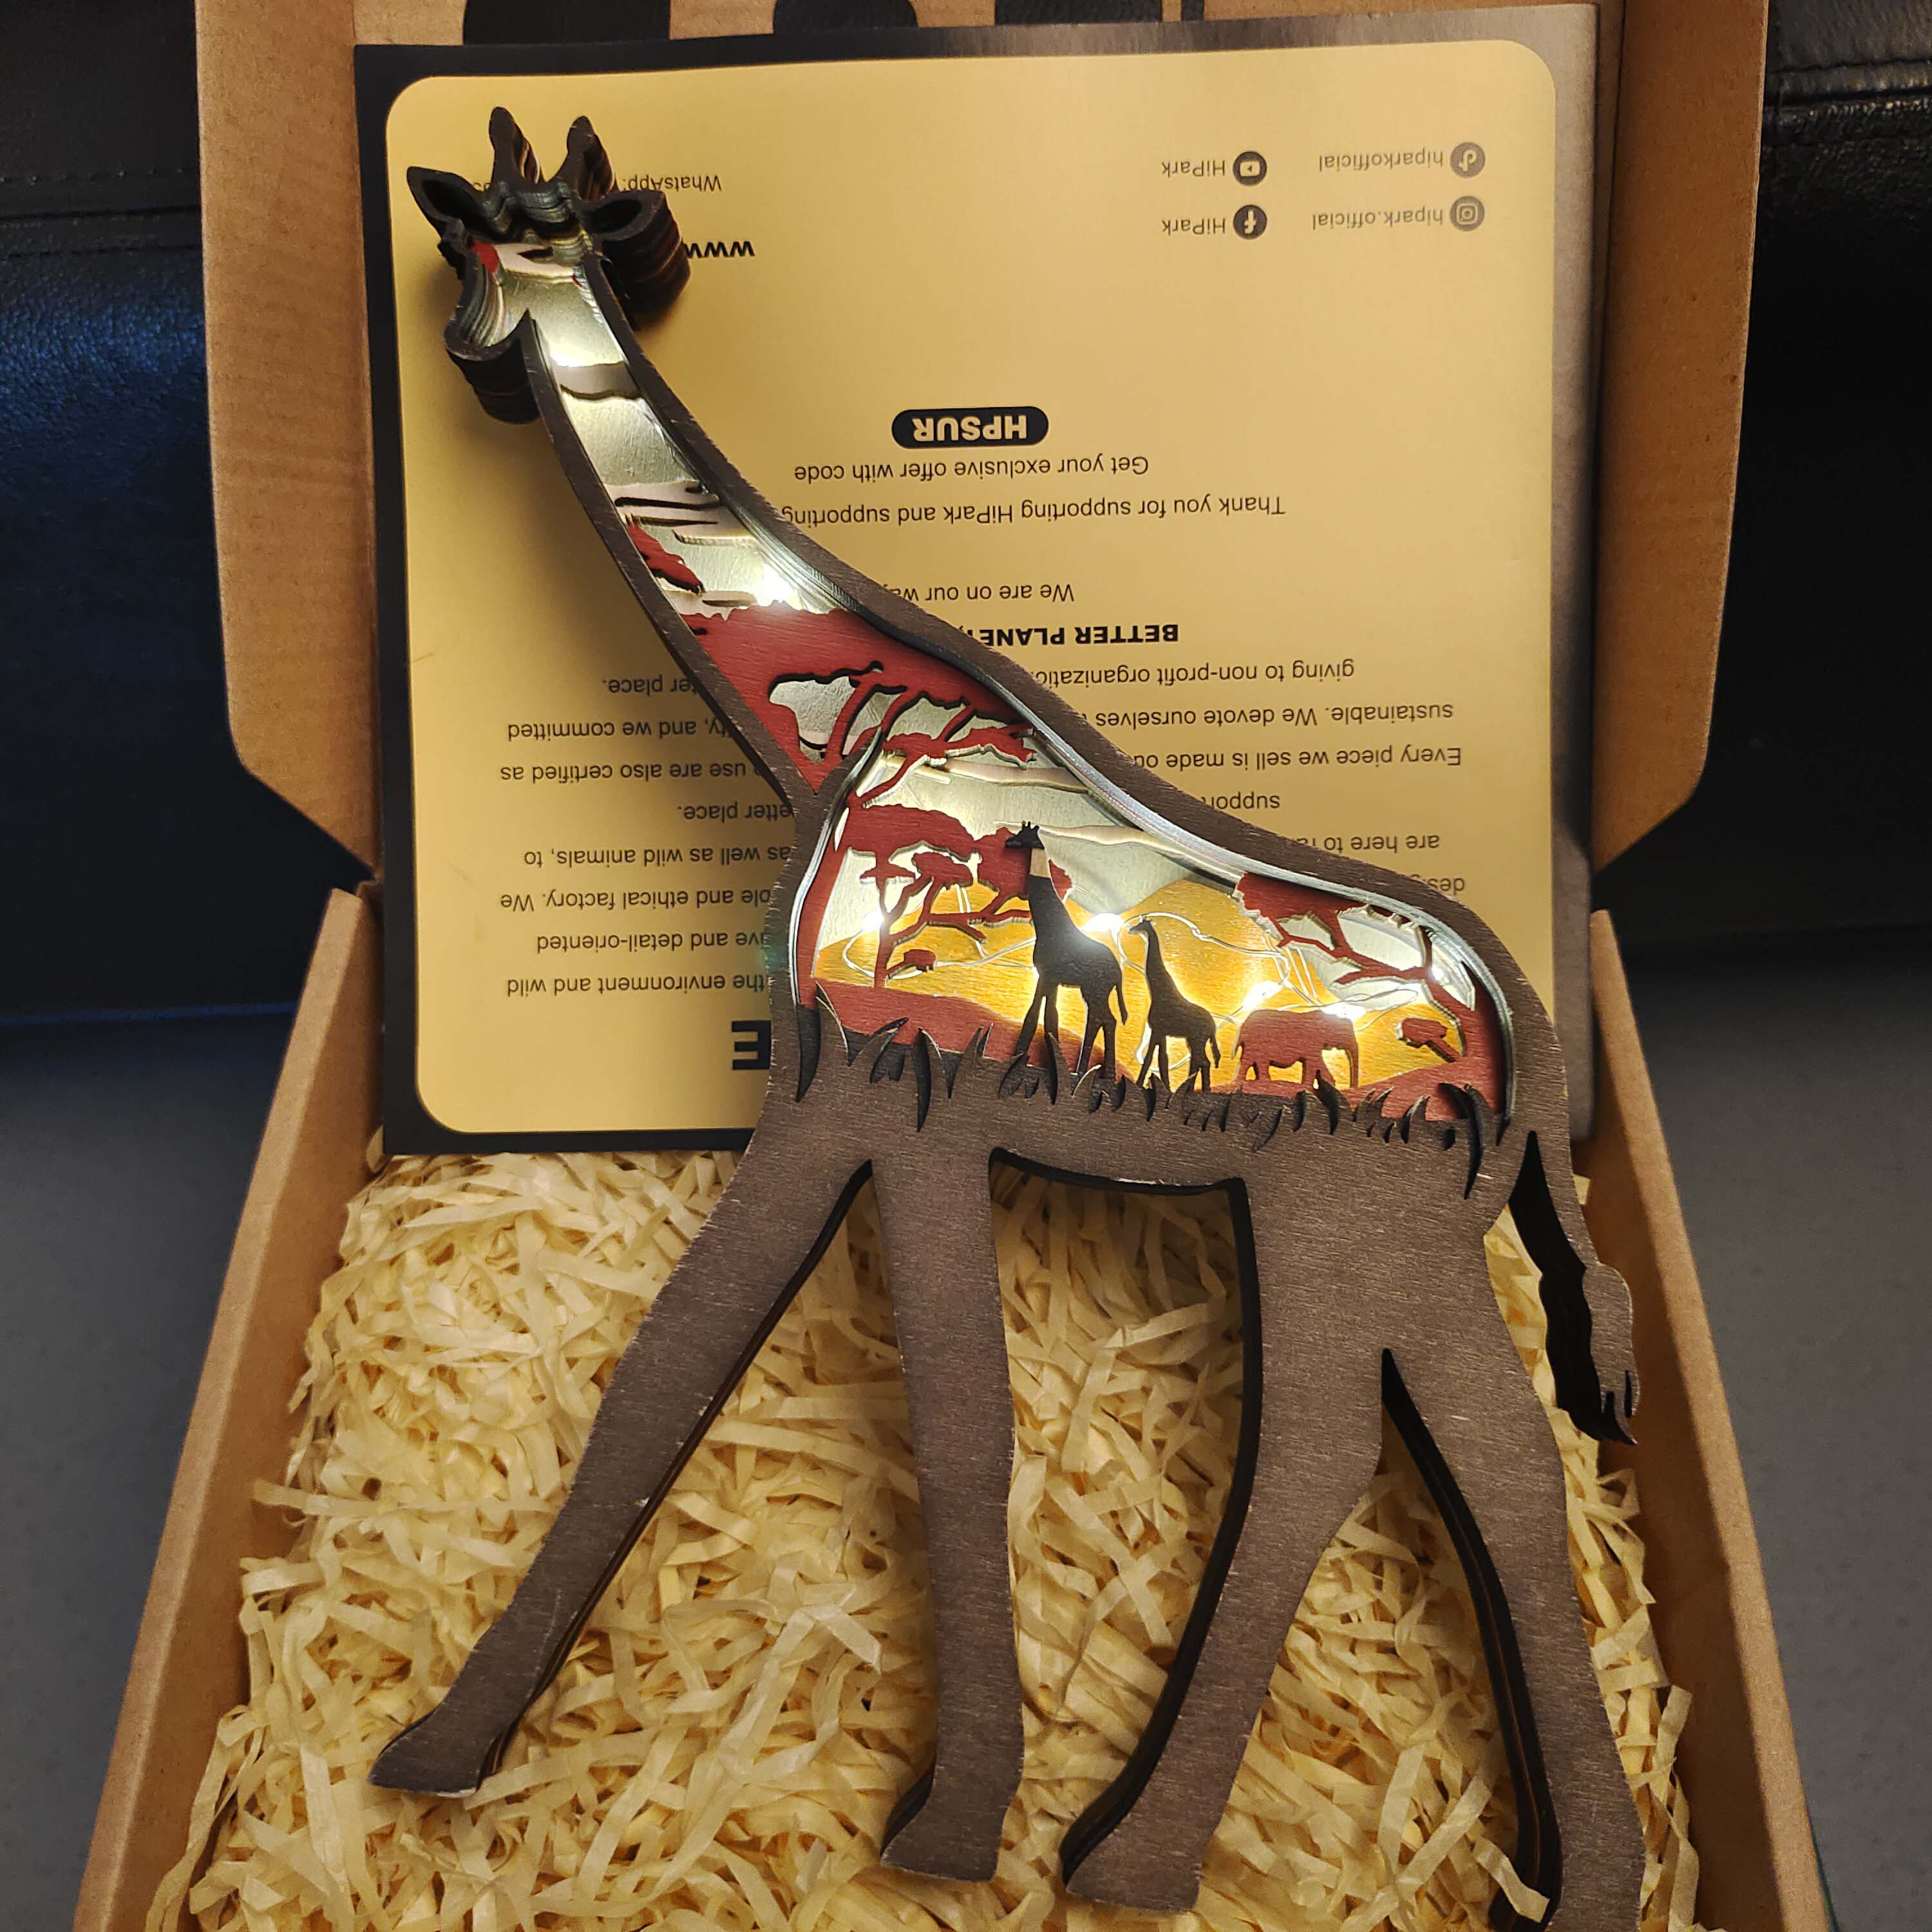 HOT SALE🔥-Giraffe Carving Handcraft Gift